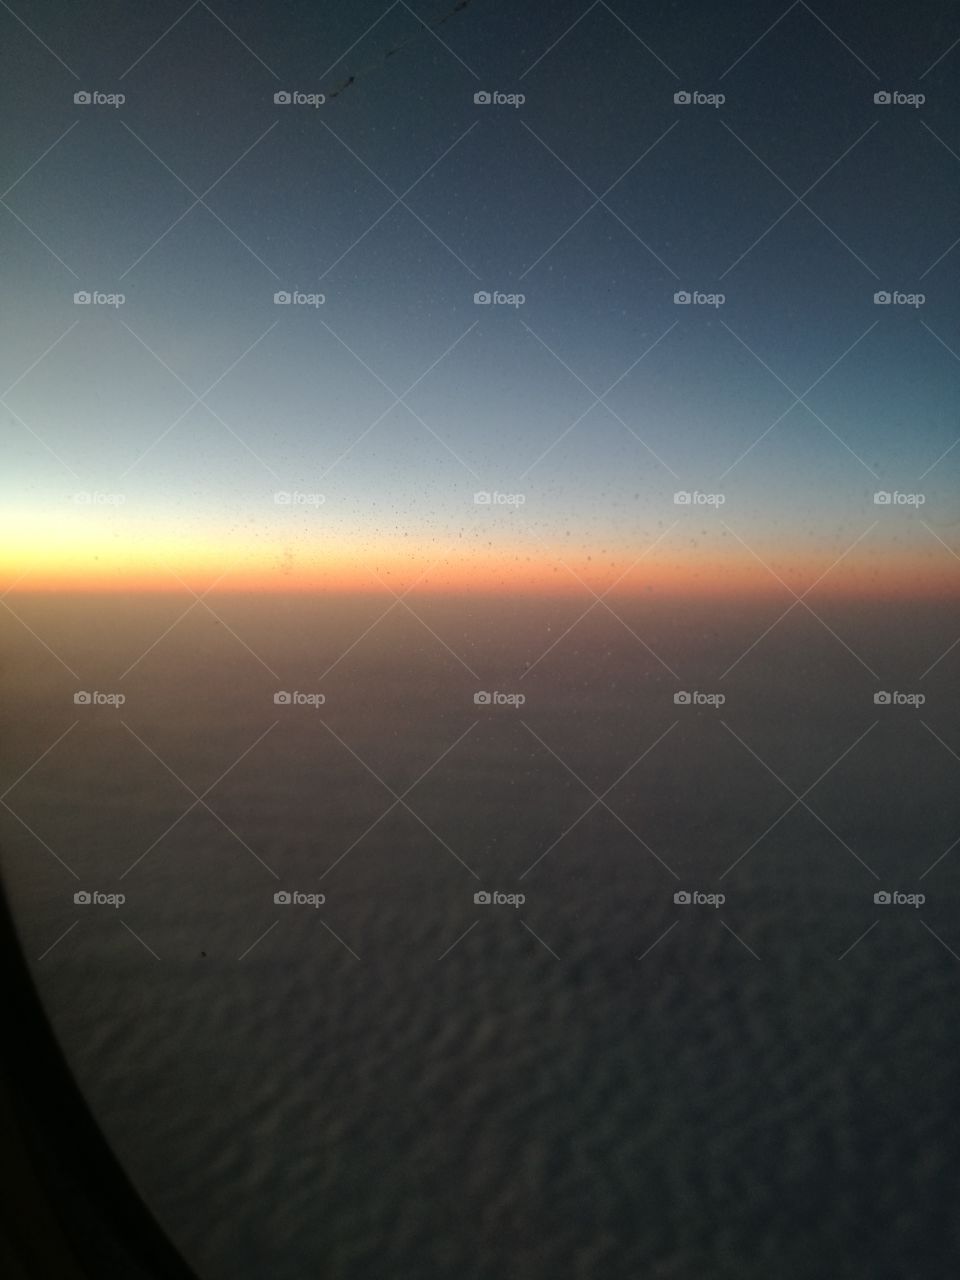 A beautiful sunset captured at 30,000 feet up over Krakow.